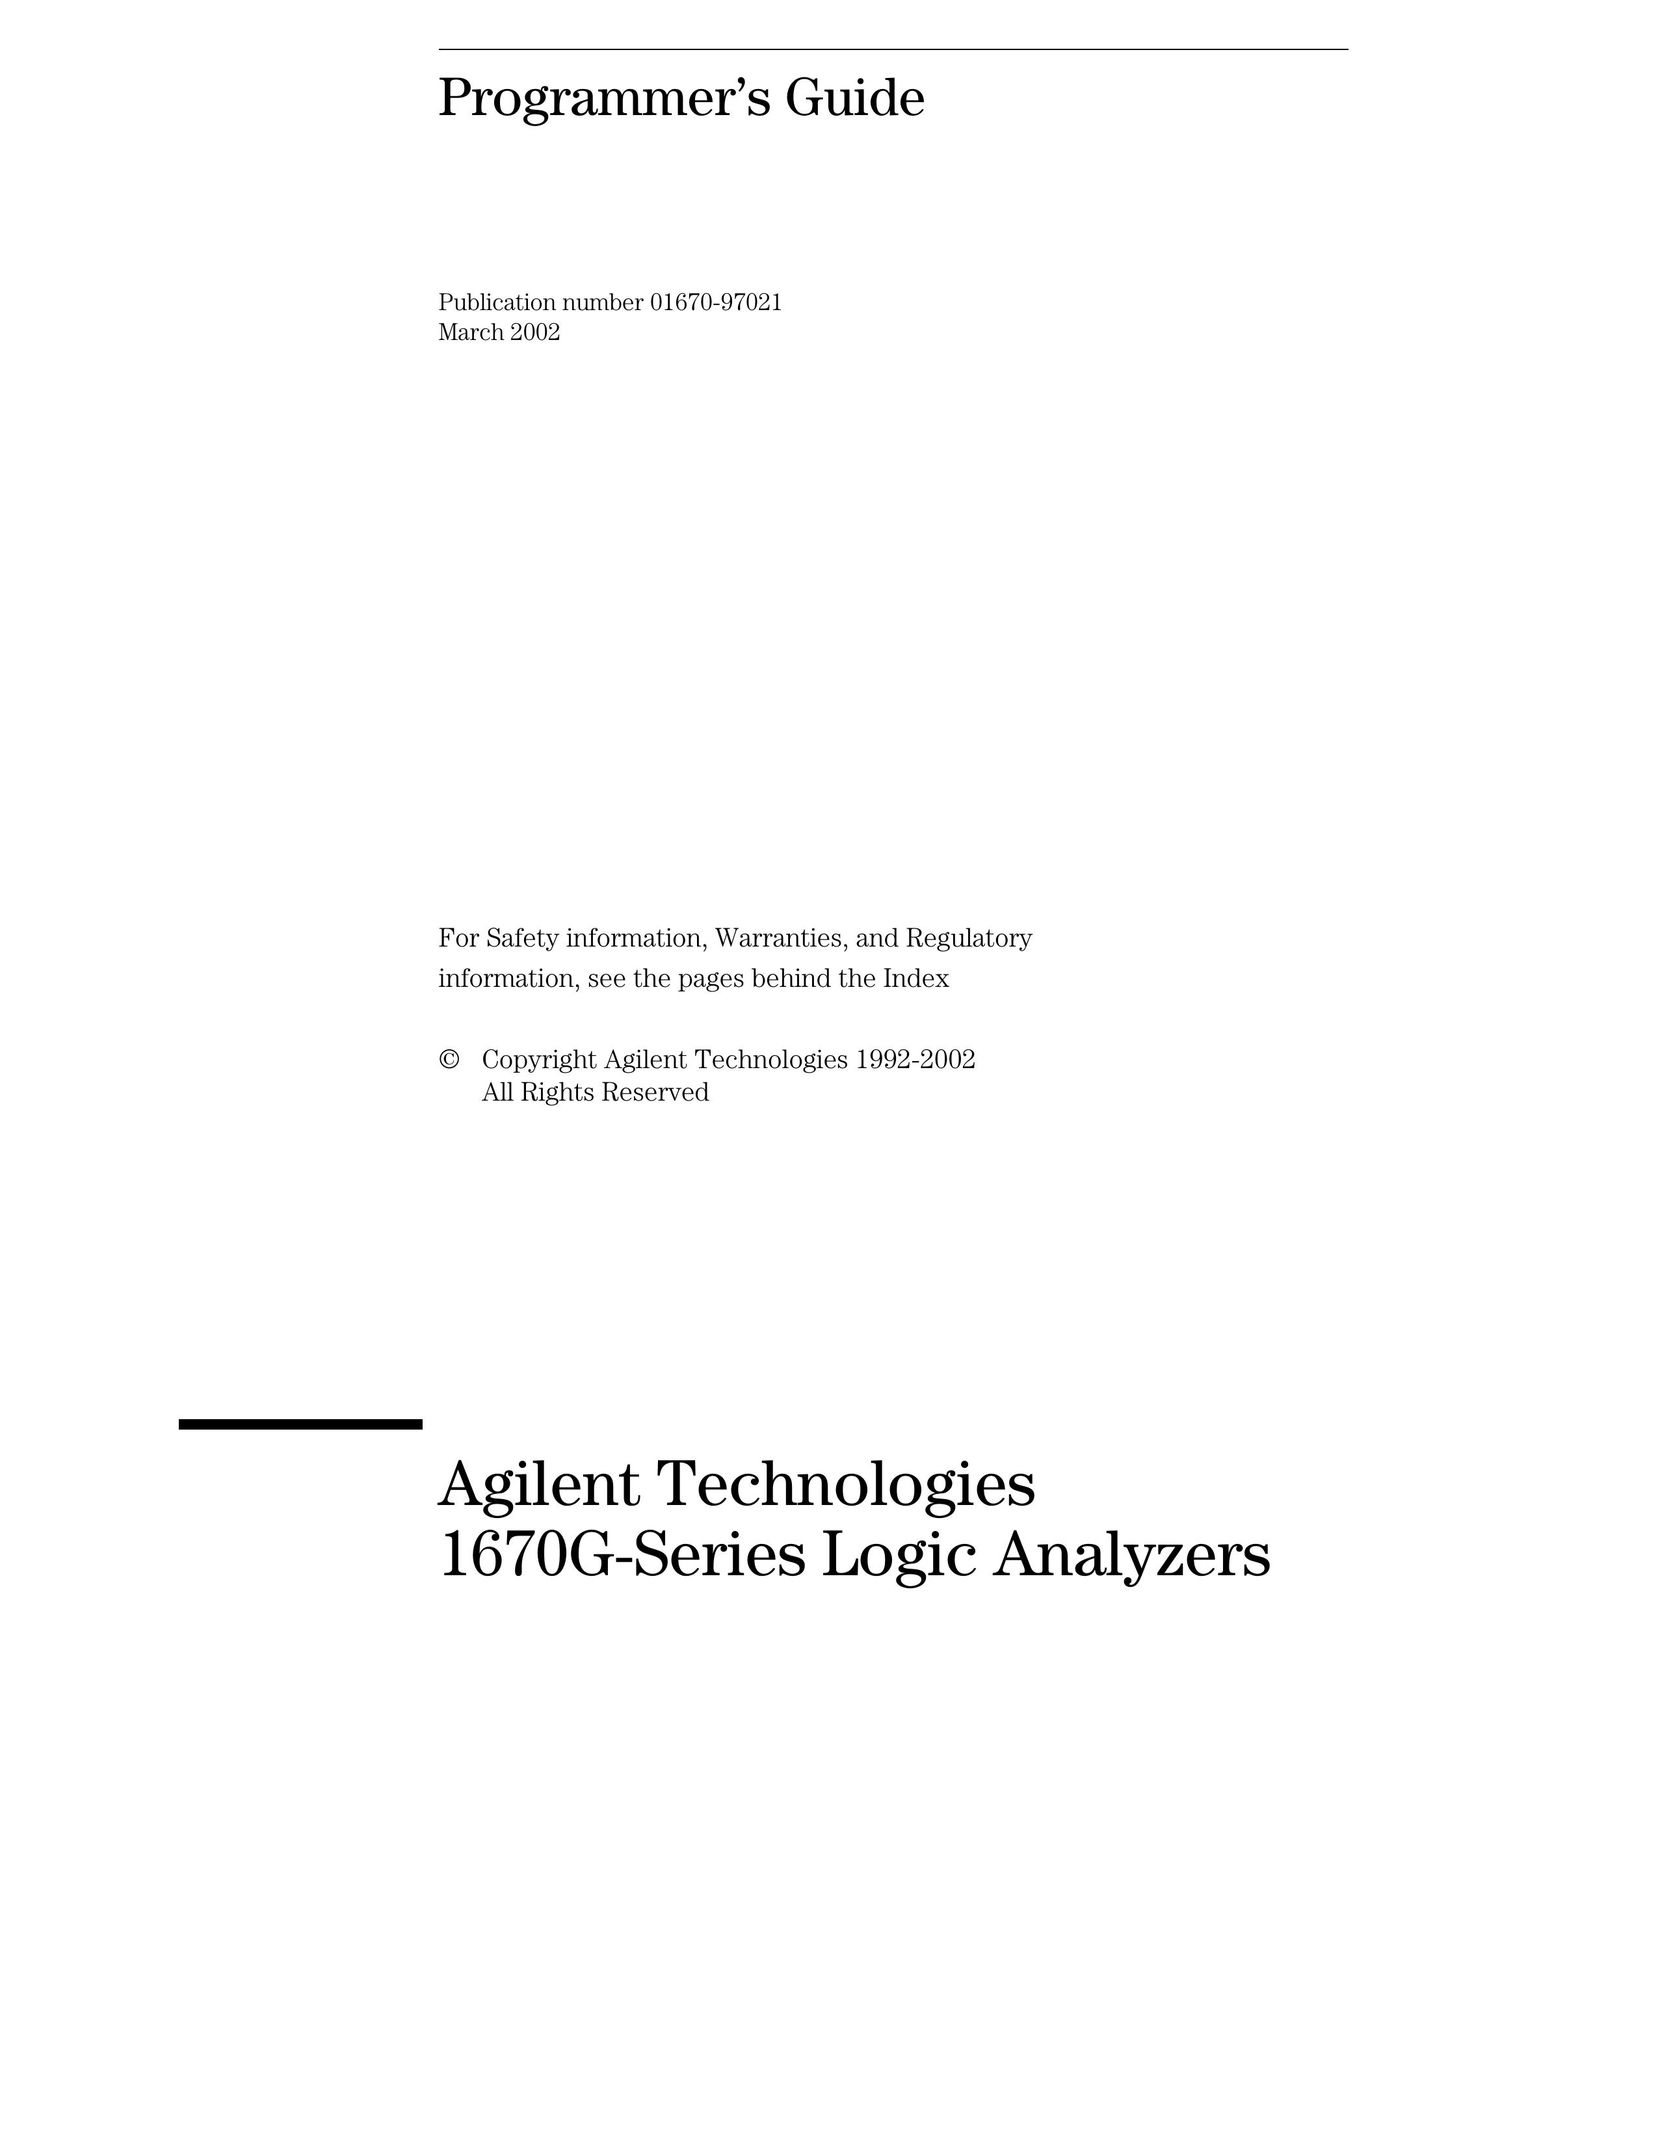 Agilent Technologies 1670G Printer Accessories User Manual